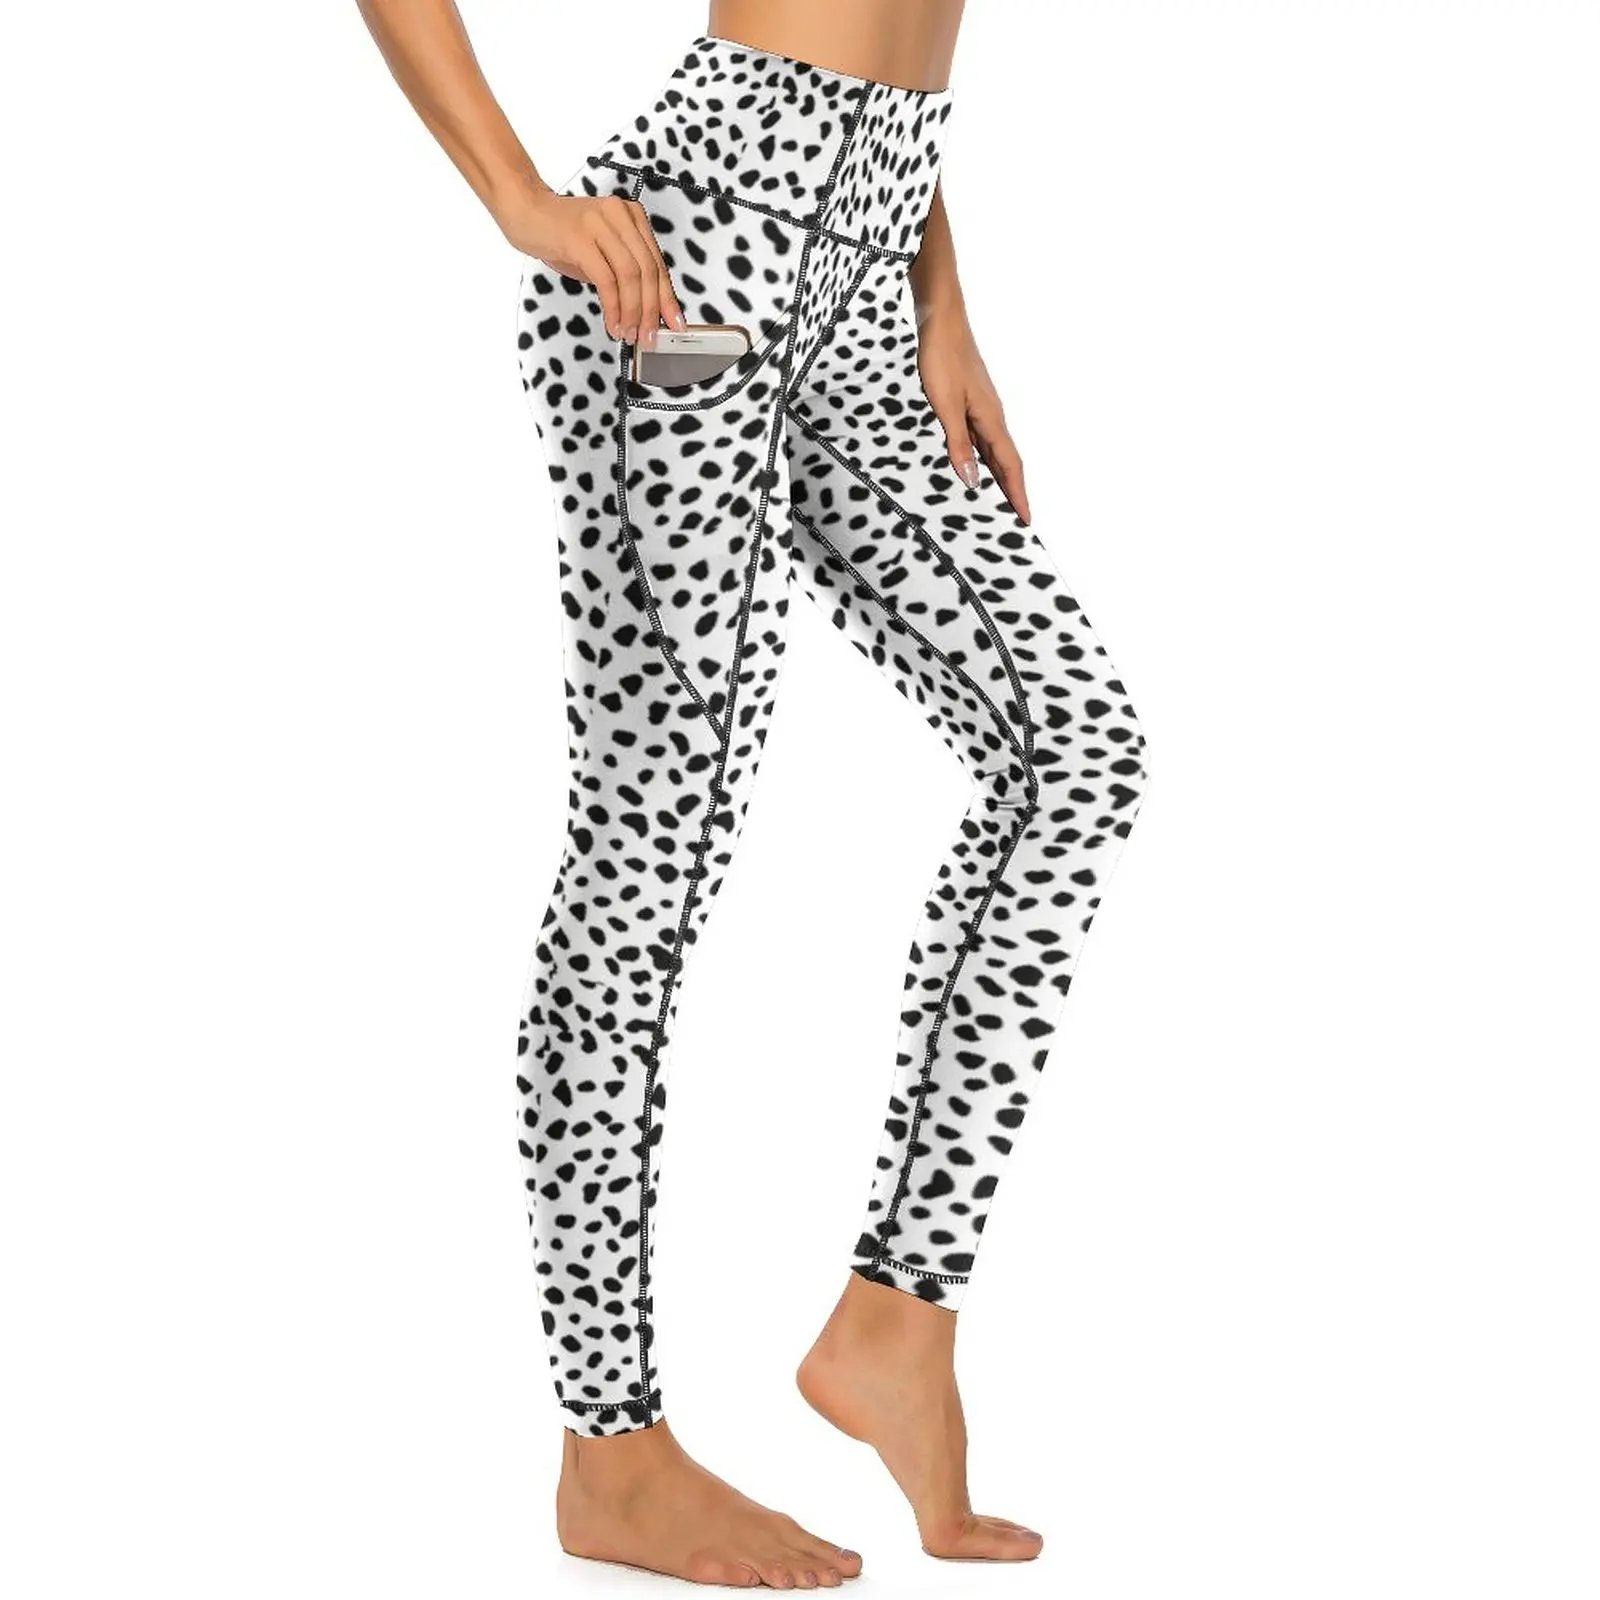 

Dalmation Print Leggings Black Polka Dots Fitness Yoga Pants Women Push Up Kawaii Leggins Sexy Stretchy Graphic Sport Legging